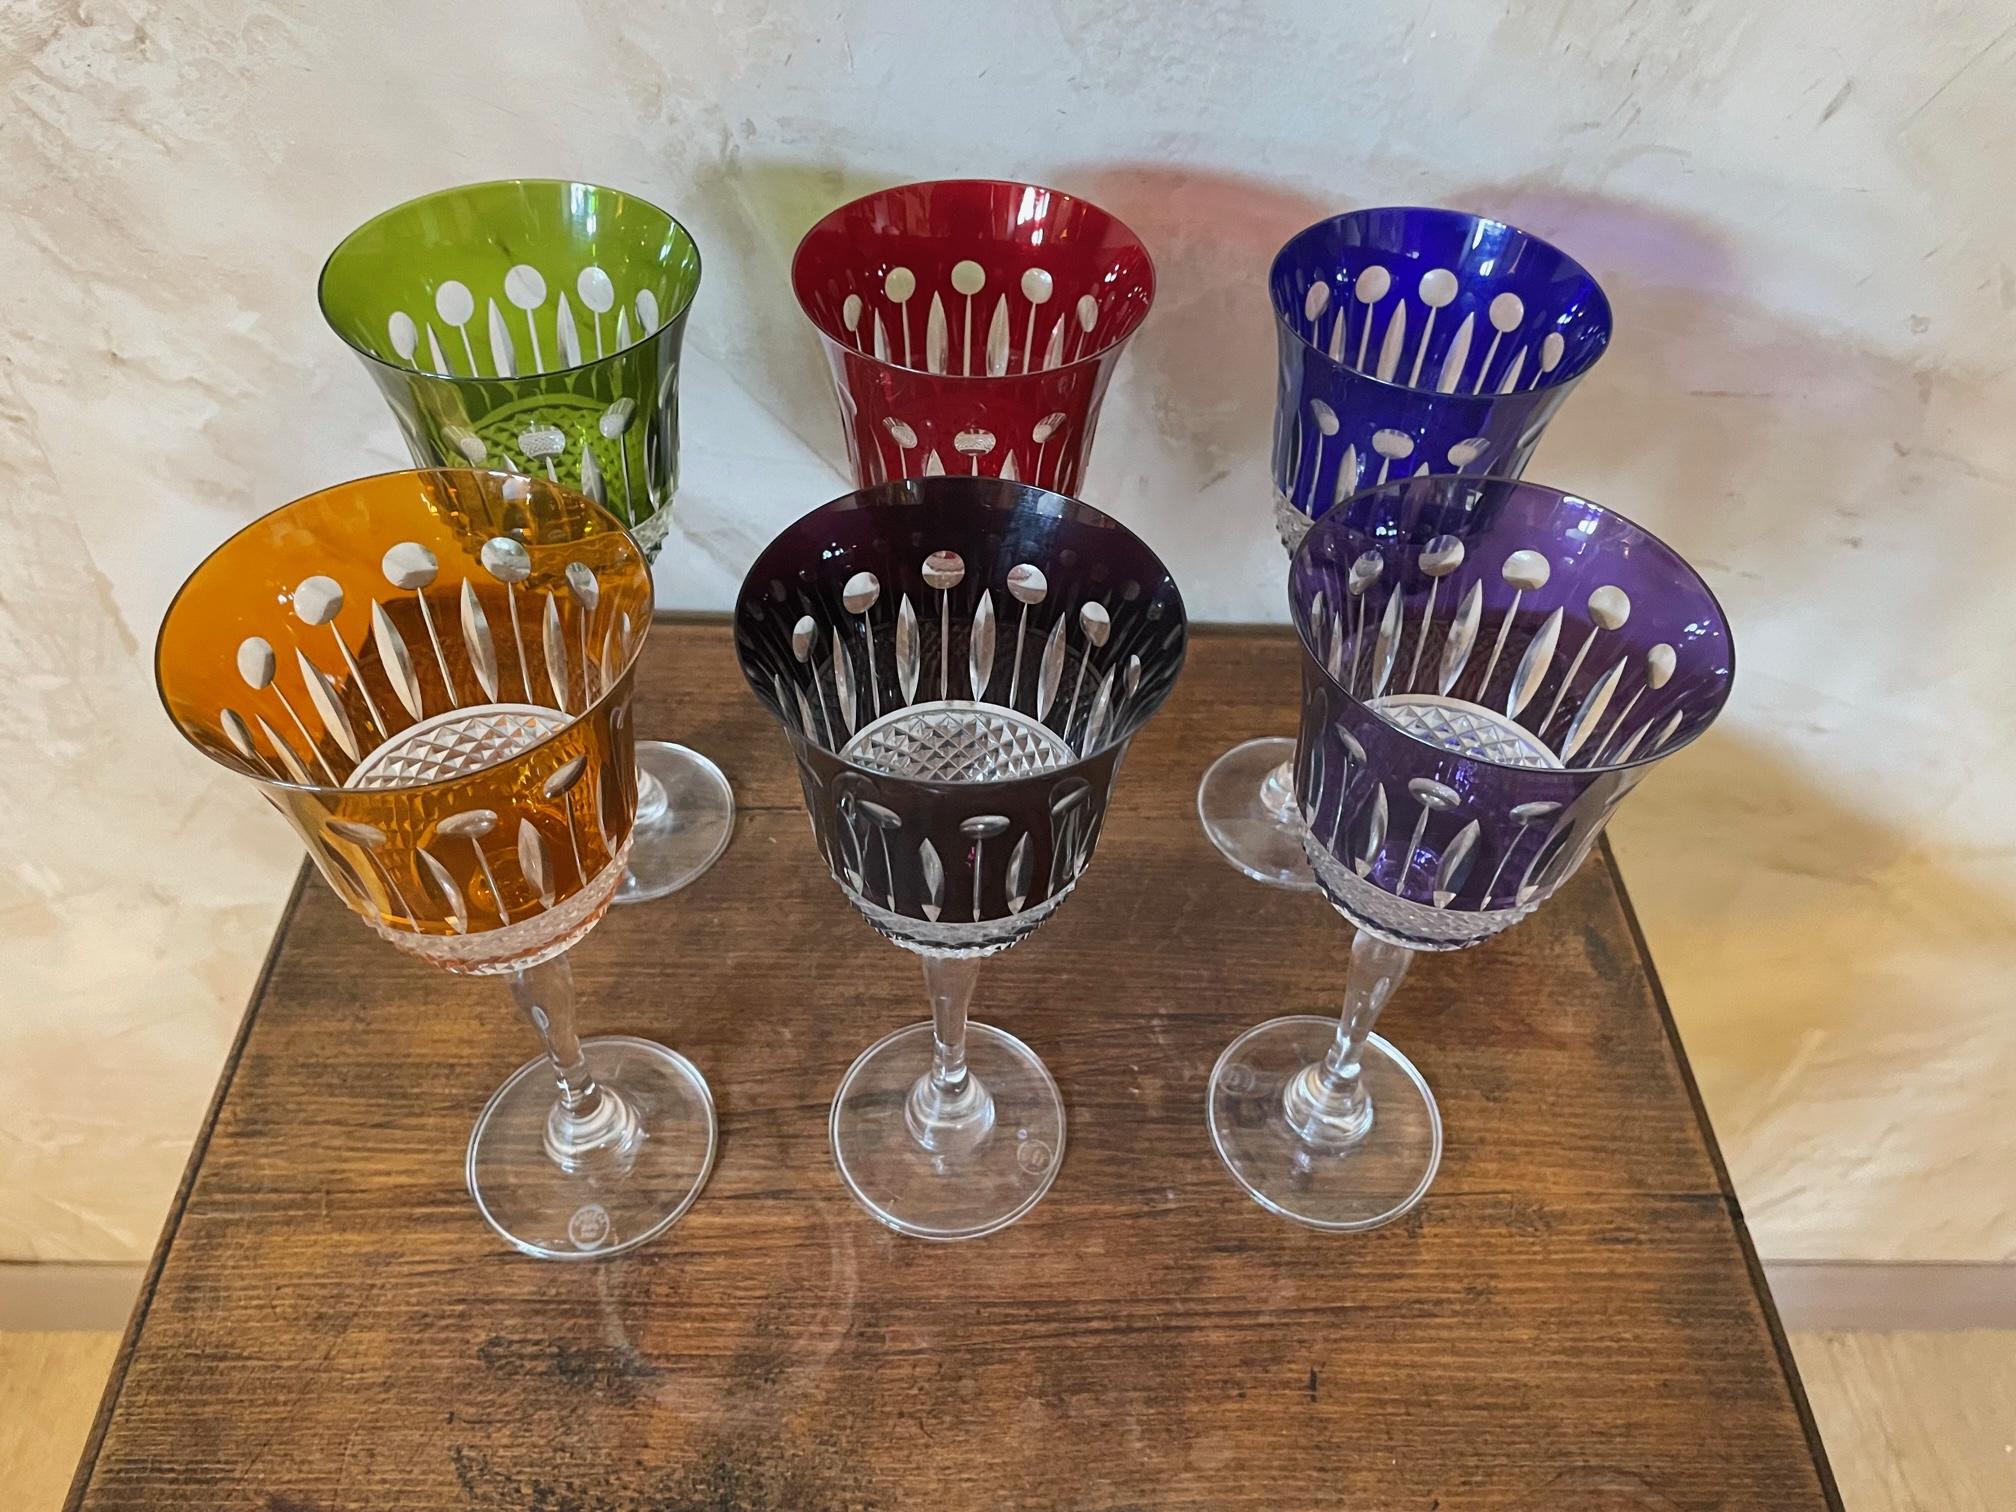 20th Century French Set of 6 Crystal Glasses by La Cristallerie de Paris For Sale 2